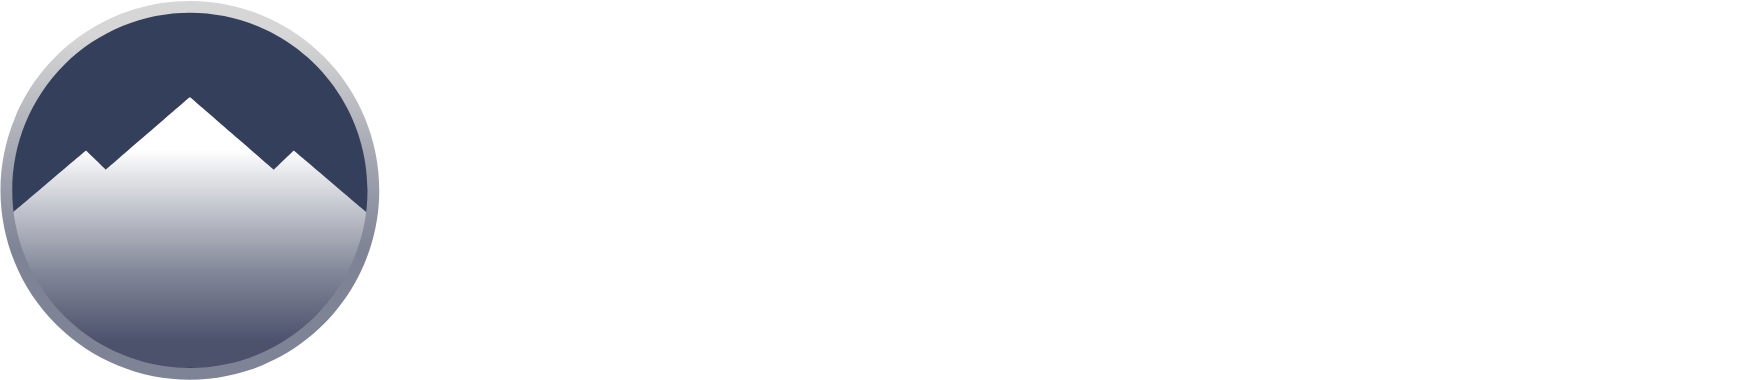 Summit Hotel Properties logo grand pour les fonds sombres (PNG transparent)